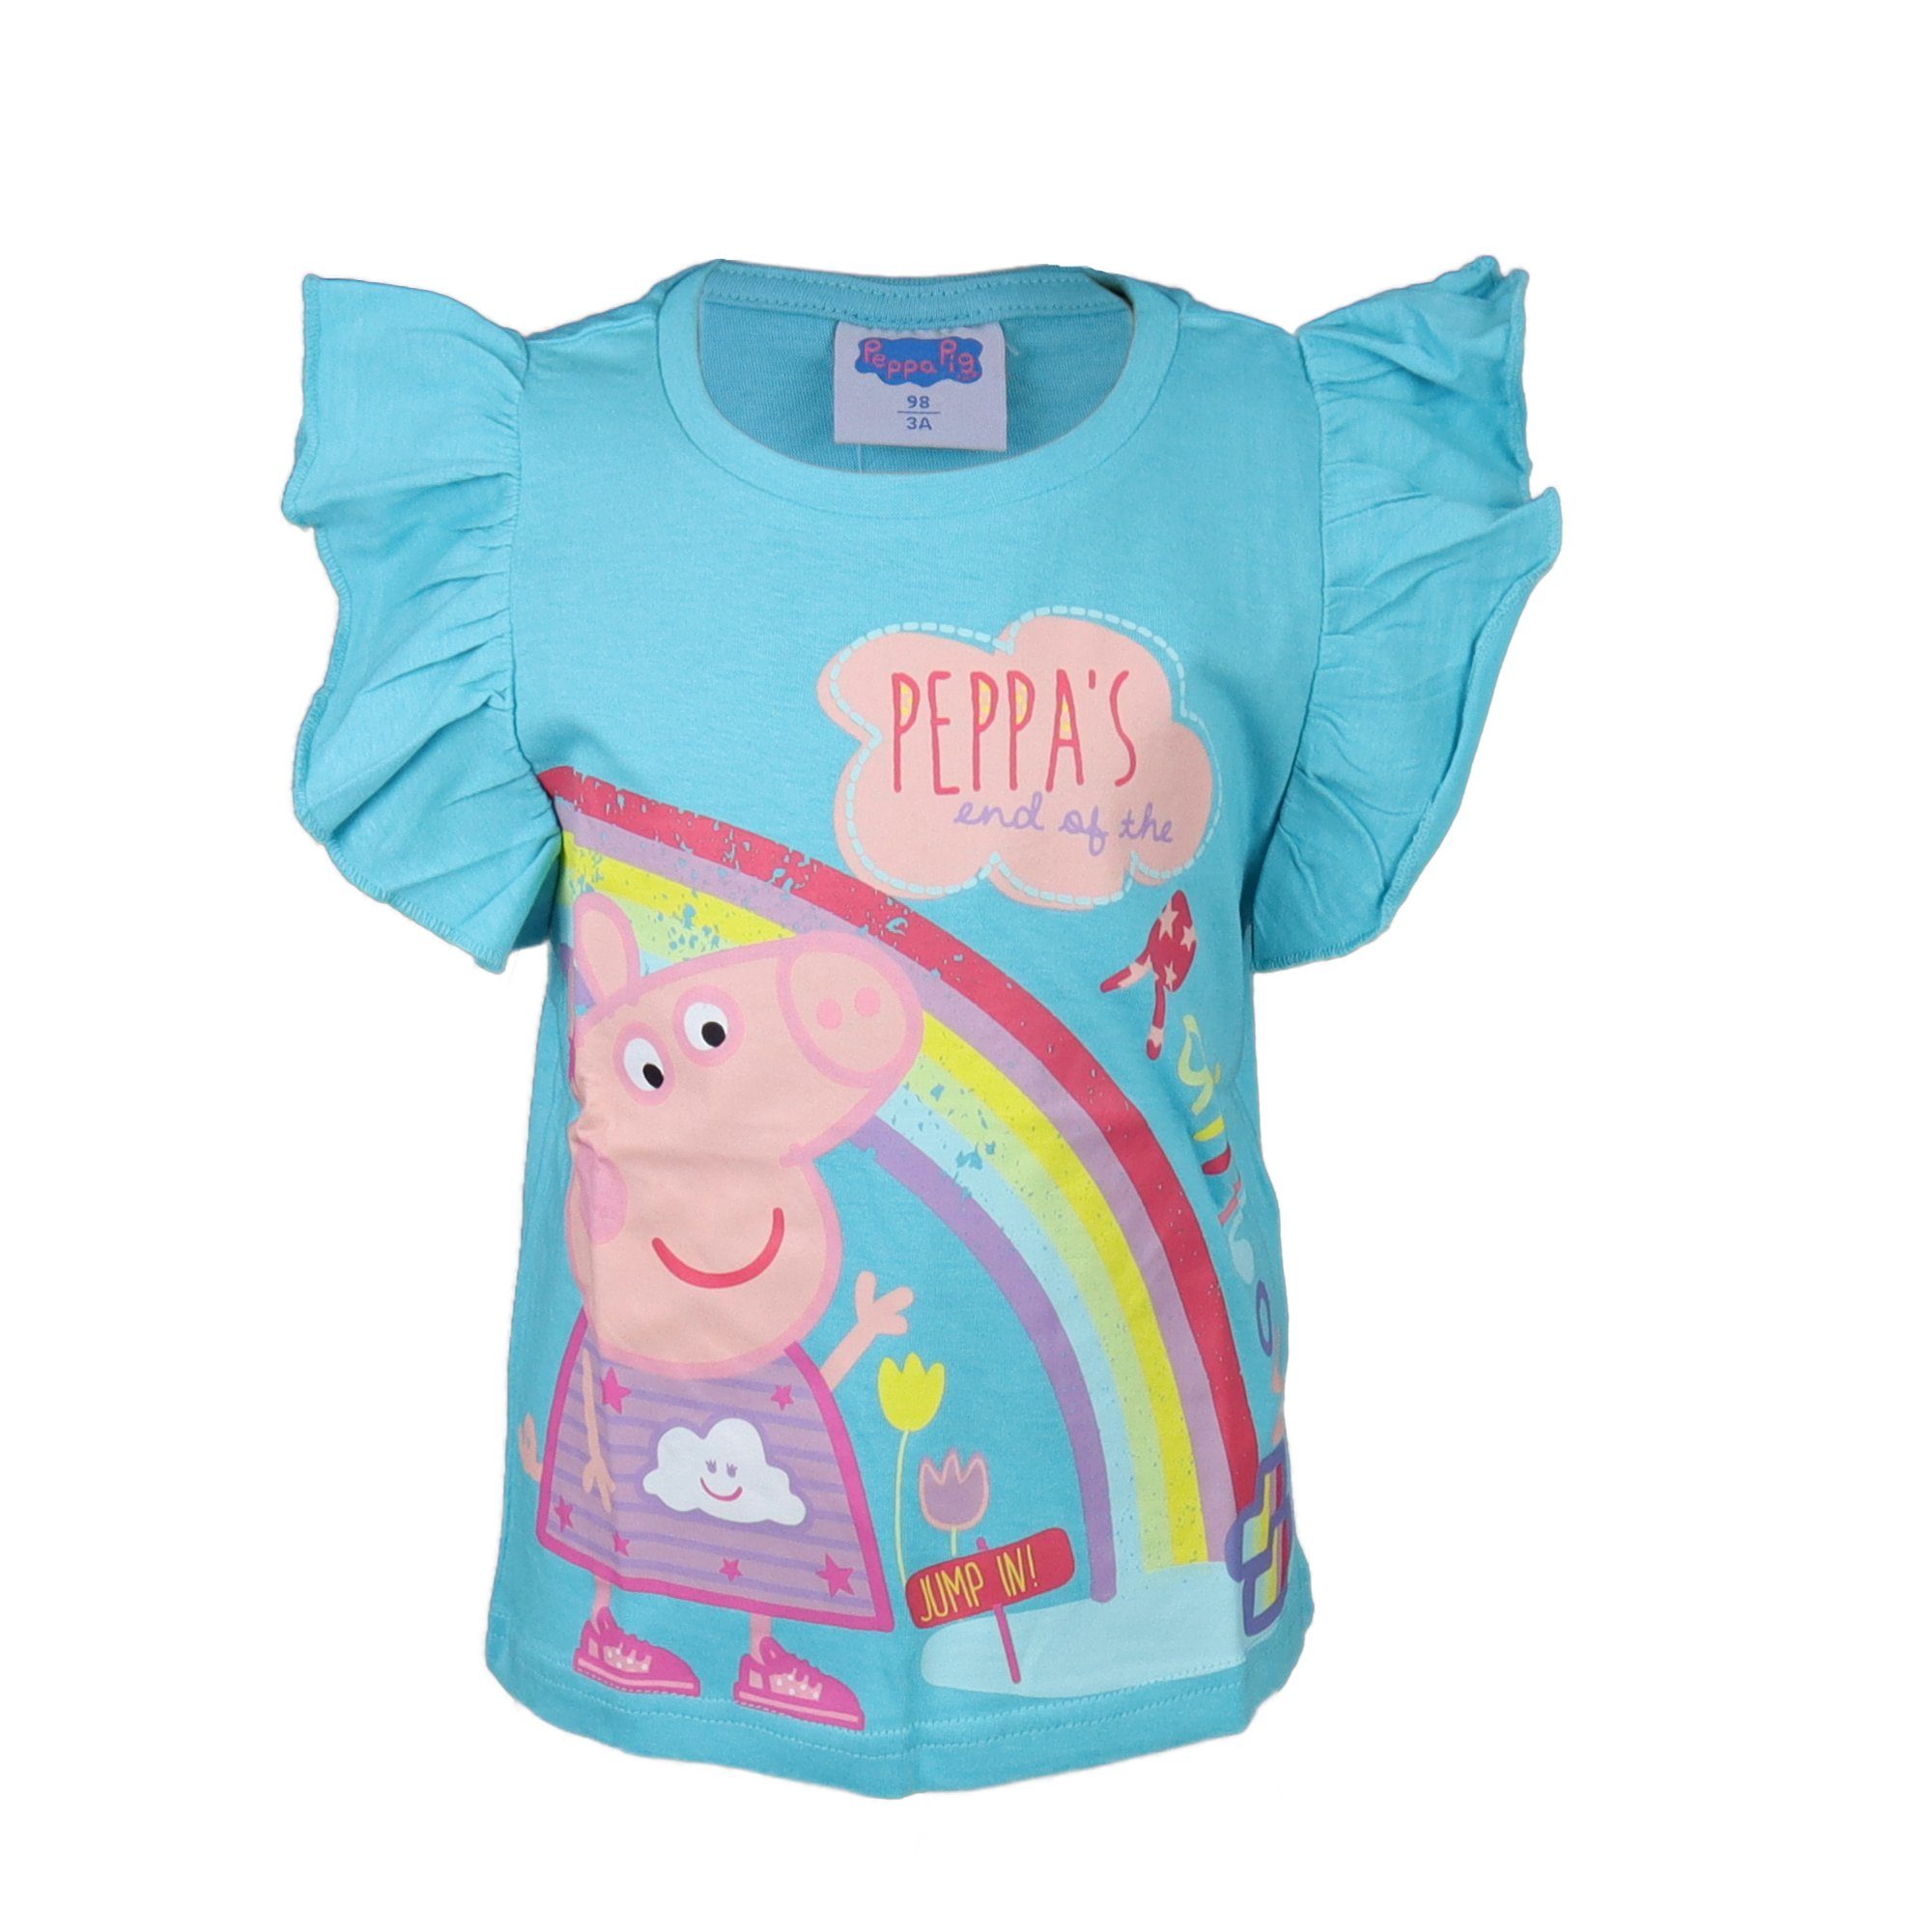 Peppa Pig T-Shirt Wutz Kinder Shirt Gr. 92 bis 116, 100% Baumwolle Hellblau